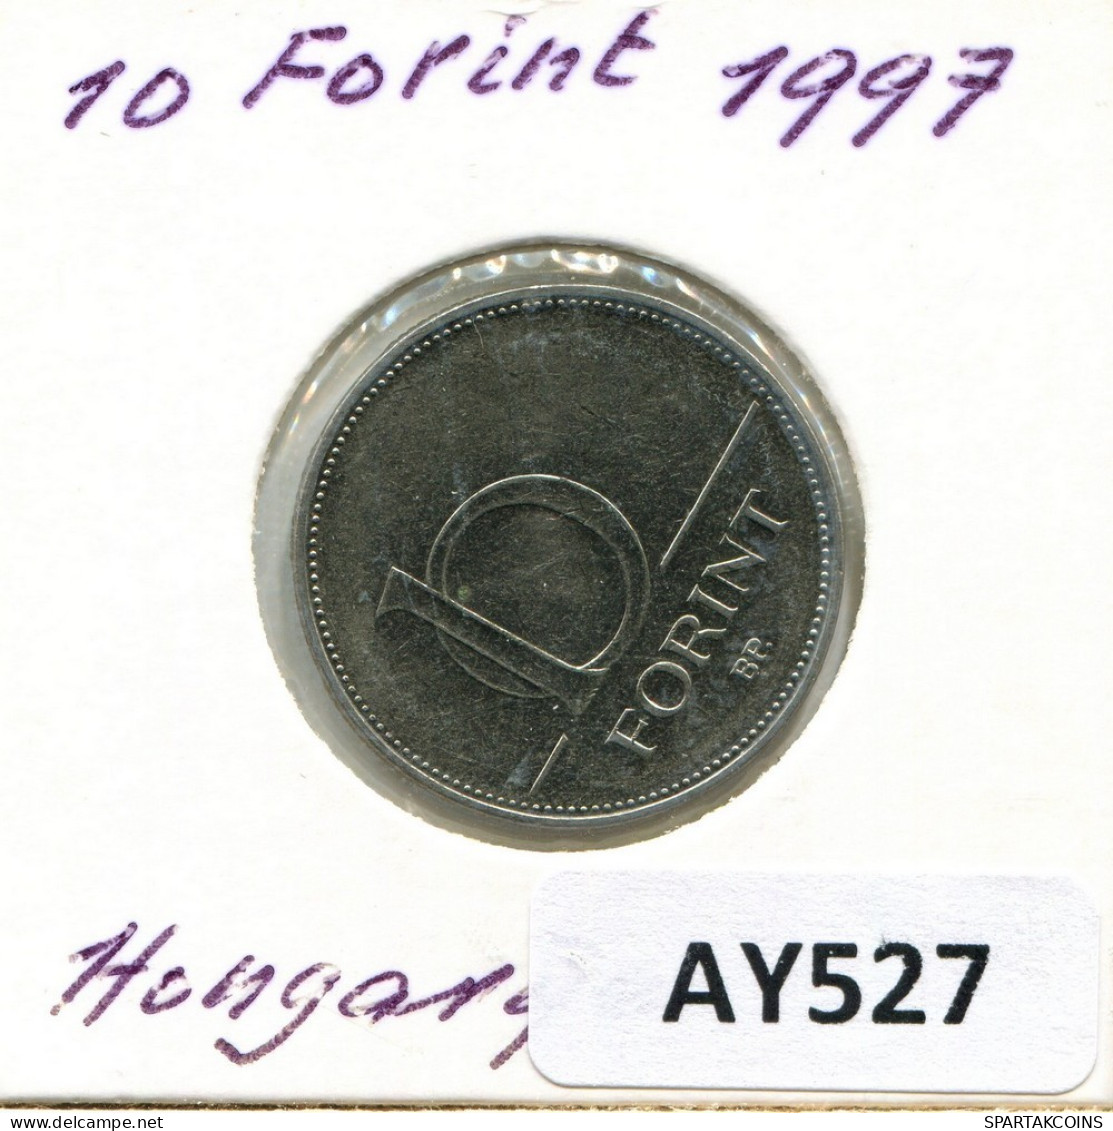 10 FORINT 1997 HUNGARY Coin #AY527.U.A - Ungarn